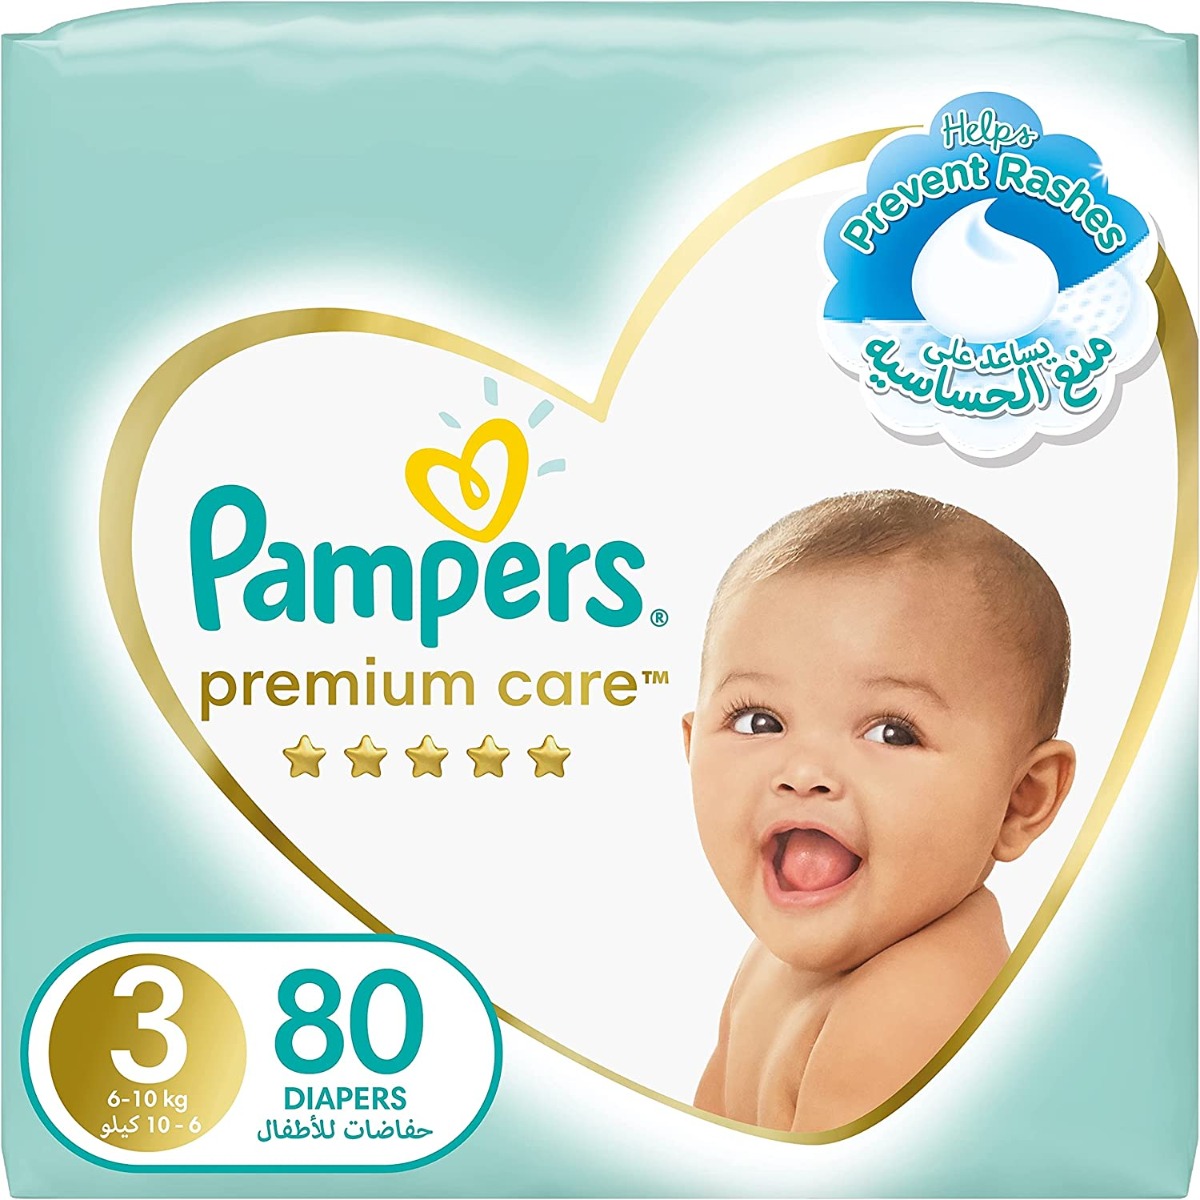 Pampers - Premium Care Diapers, Size 3, Midi, 6-10 Kg, Super Saver Pack - 80 Pcs